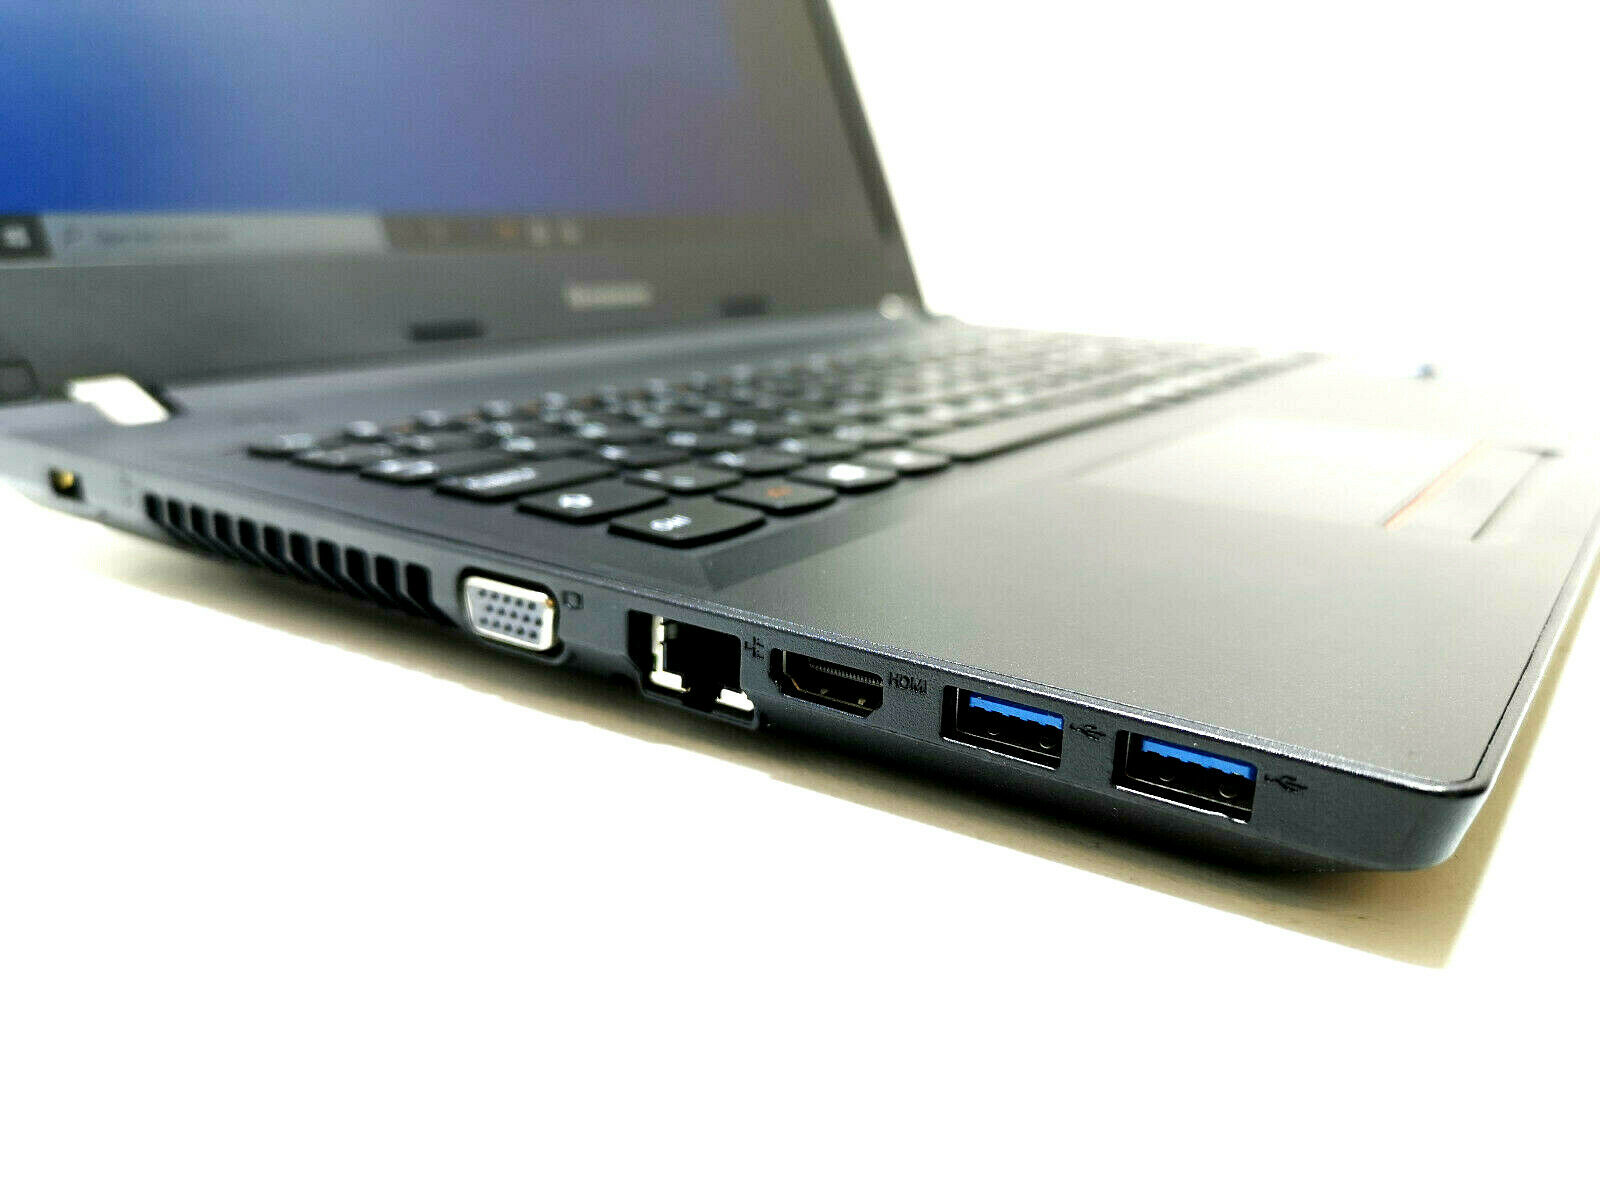 Refurbished Lenovo E50 Laptop PC